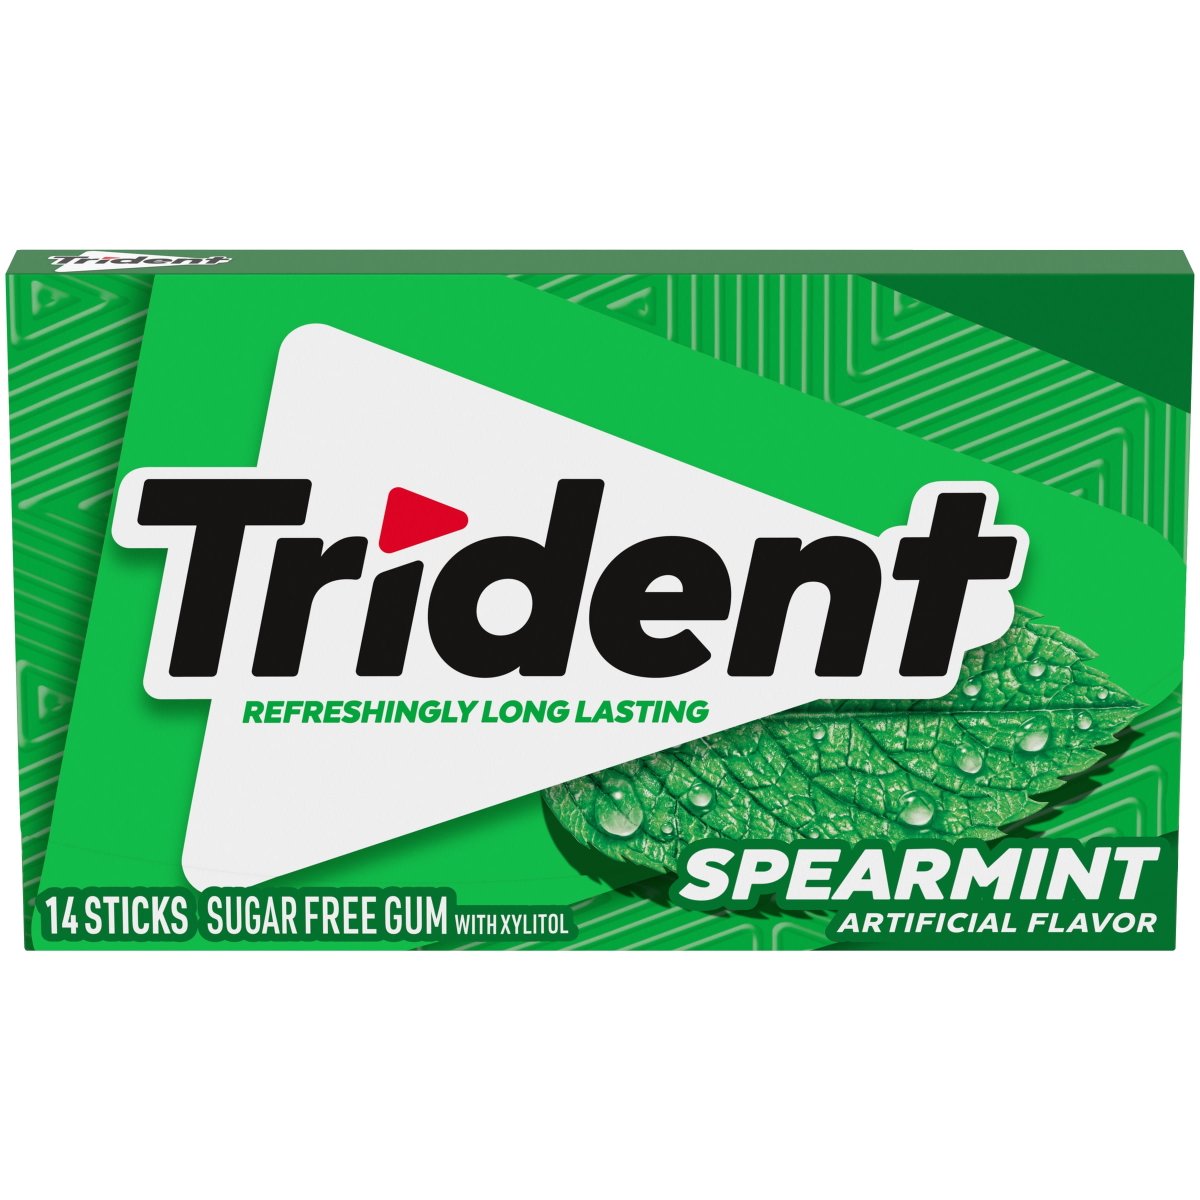 Trident - a brand of chewing gum owned by Mondelez.

Mondelez invests in Israeli startups in occupied Palestine.

#FreePalestine #BoycottIsrael 
#BoycottIsraeliProducts